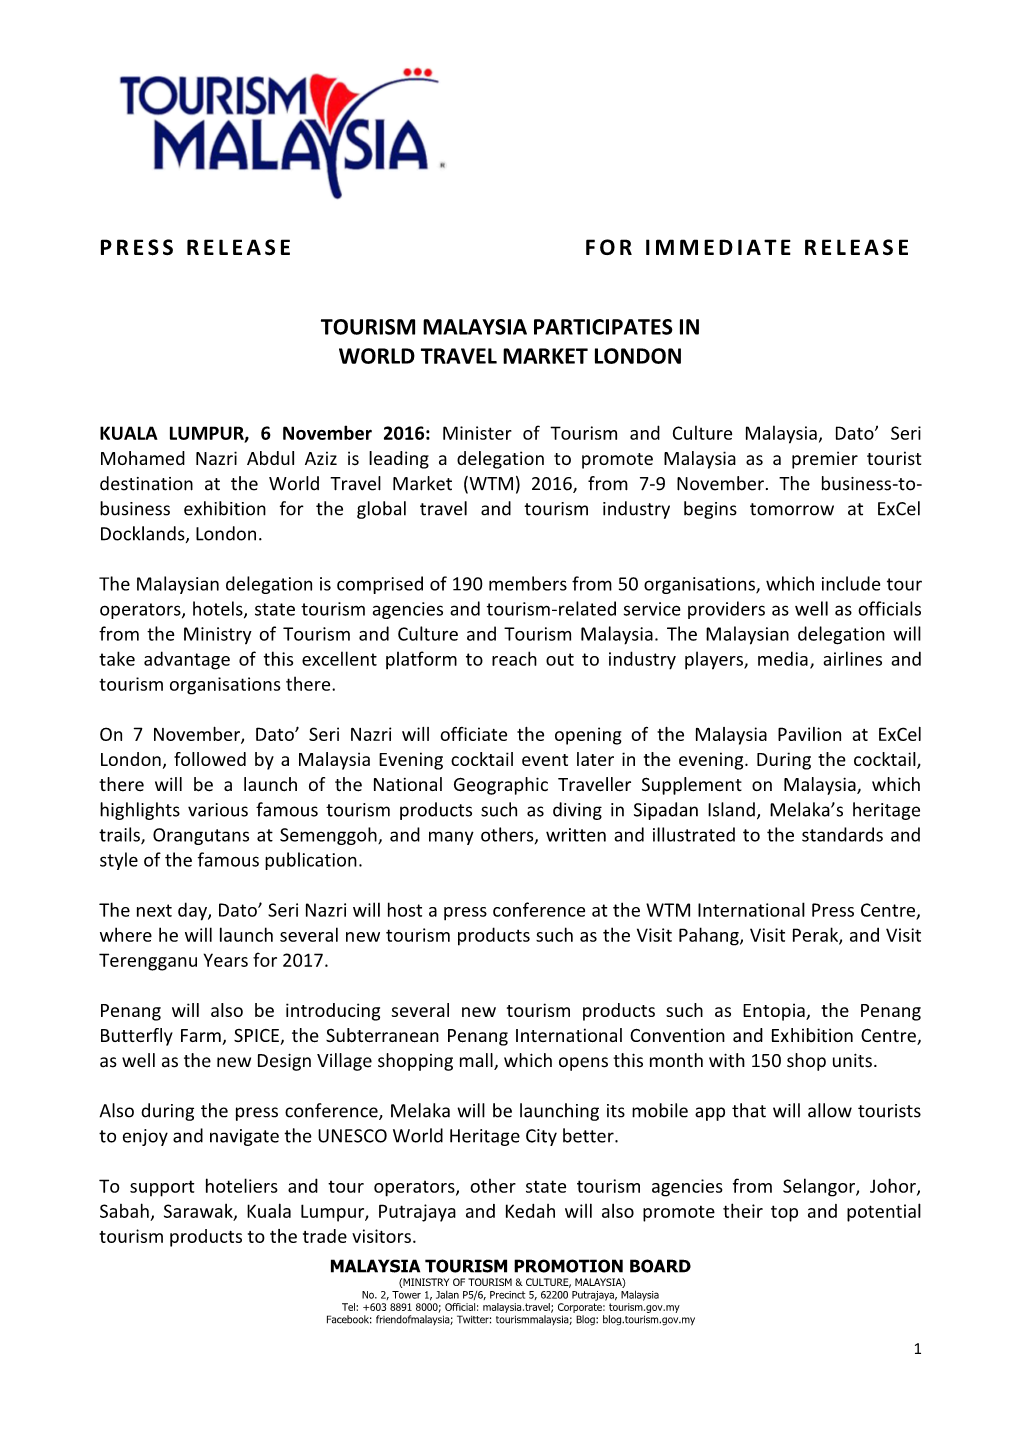 Press Release for Immediate Release Tourism Malaysia